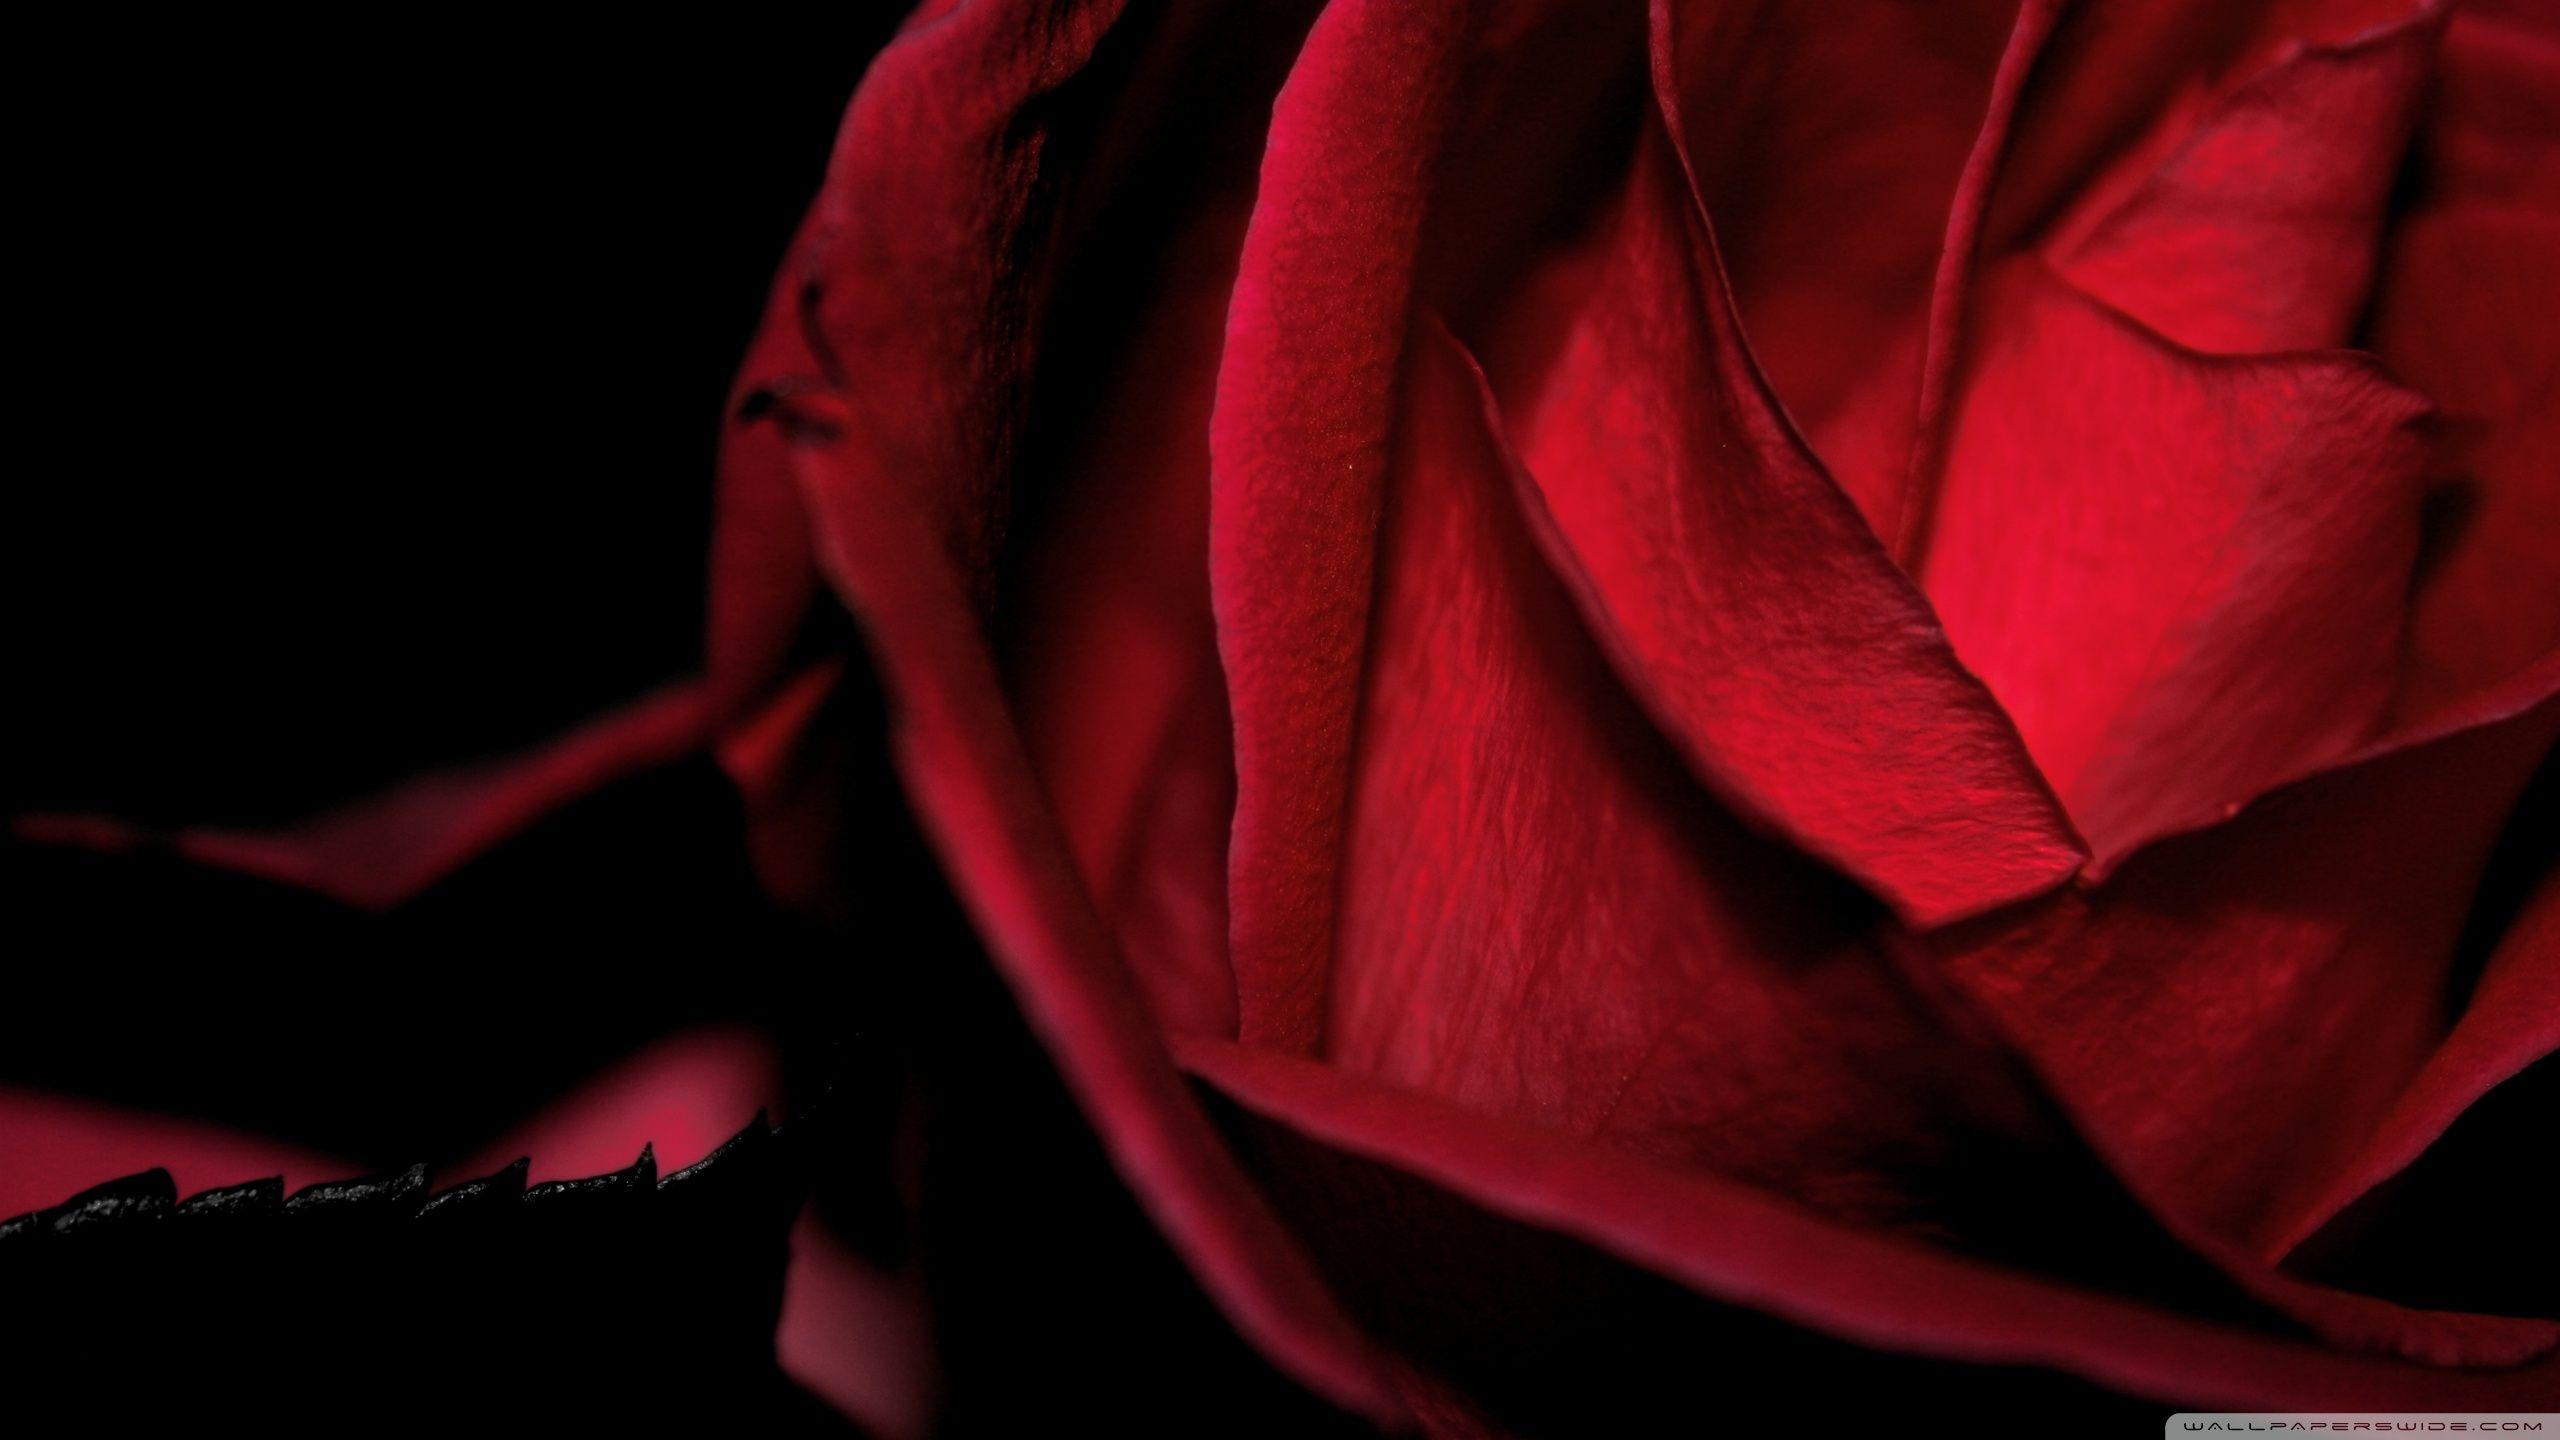 Dark Romantic Red Rose ❤ 4K HD Desktop Wallpaper for 4K Ultra HD TV